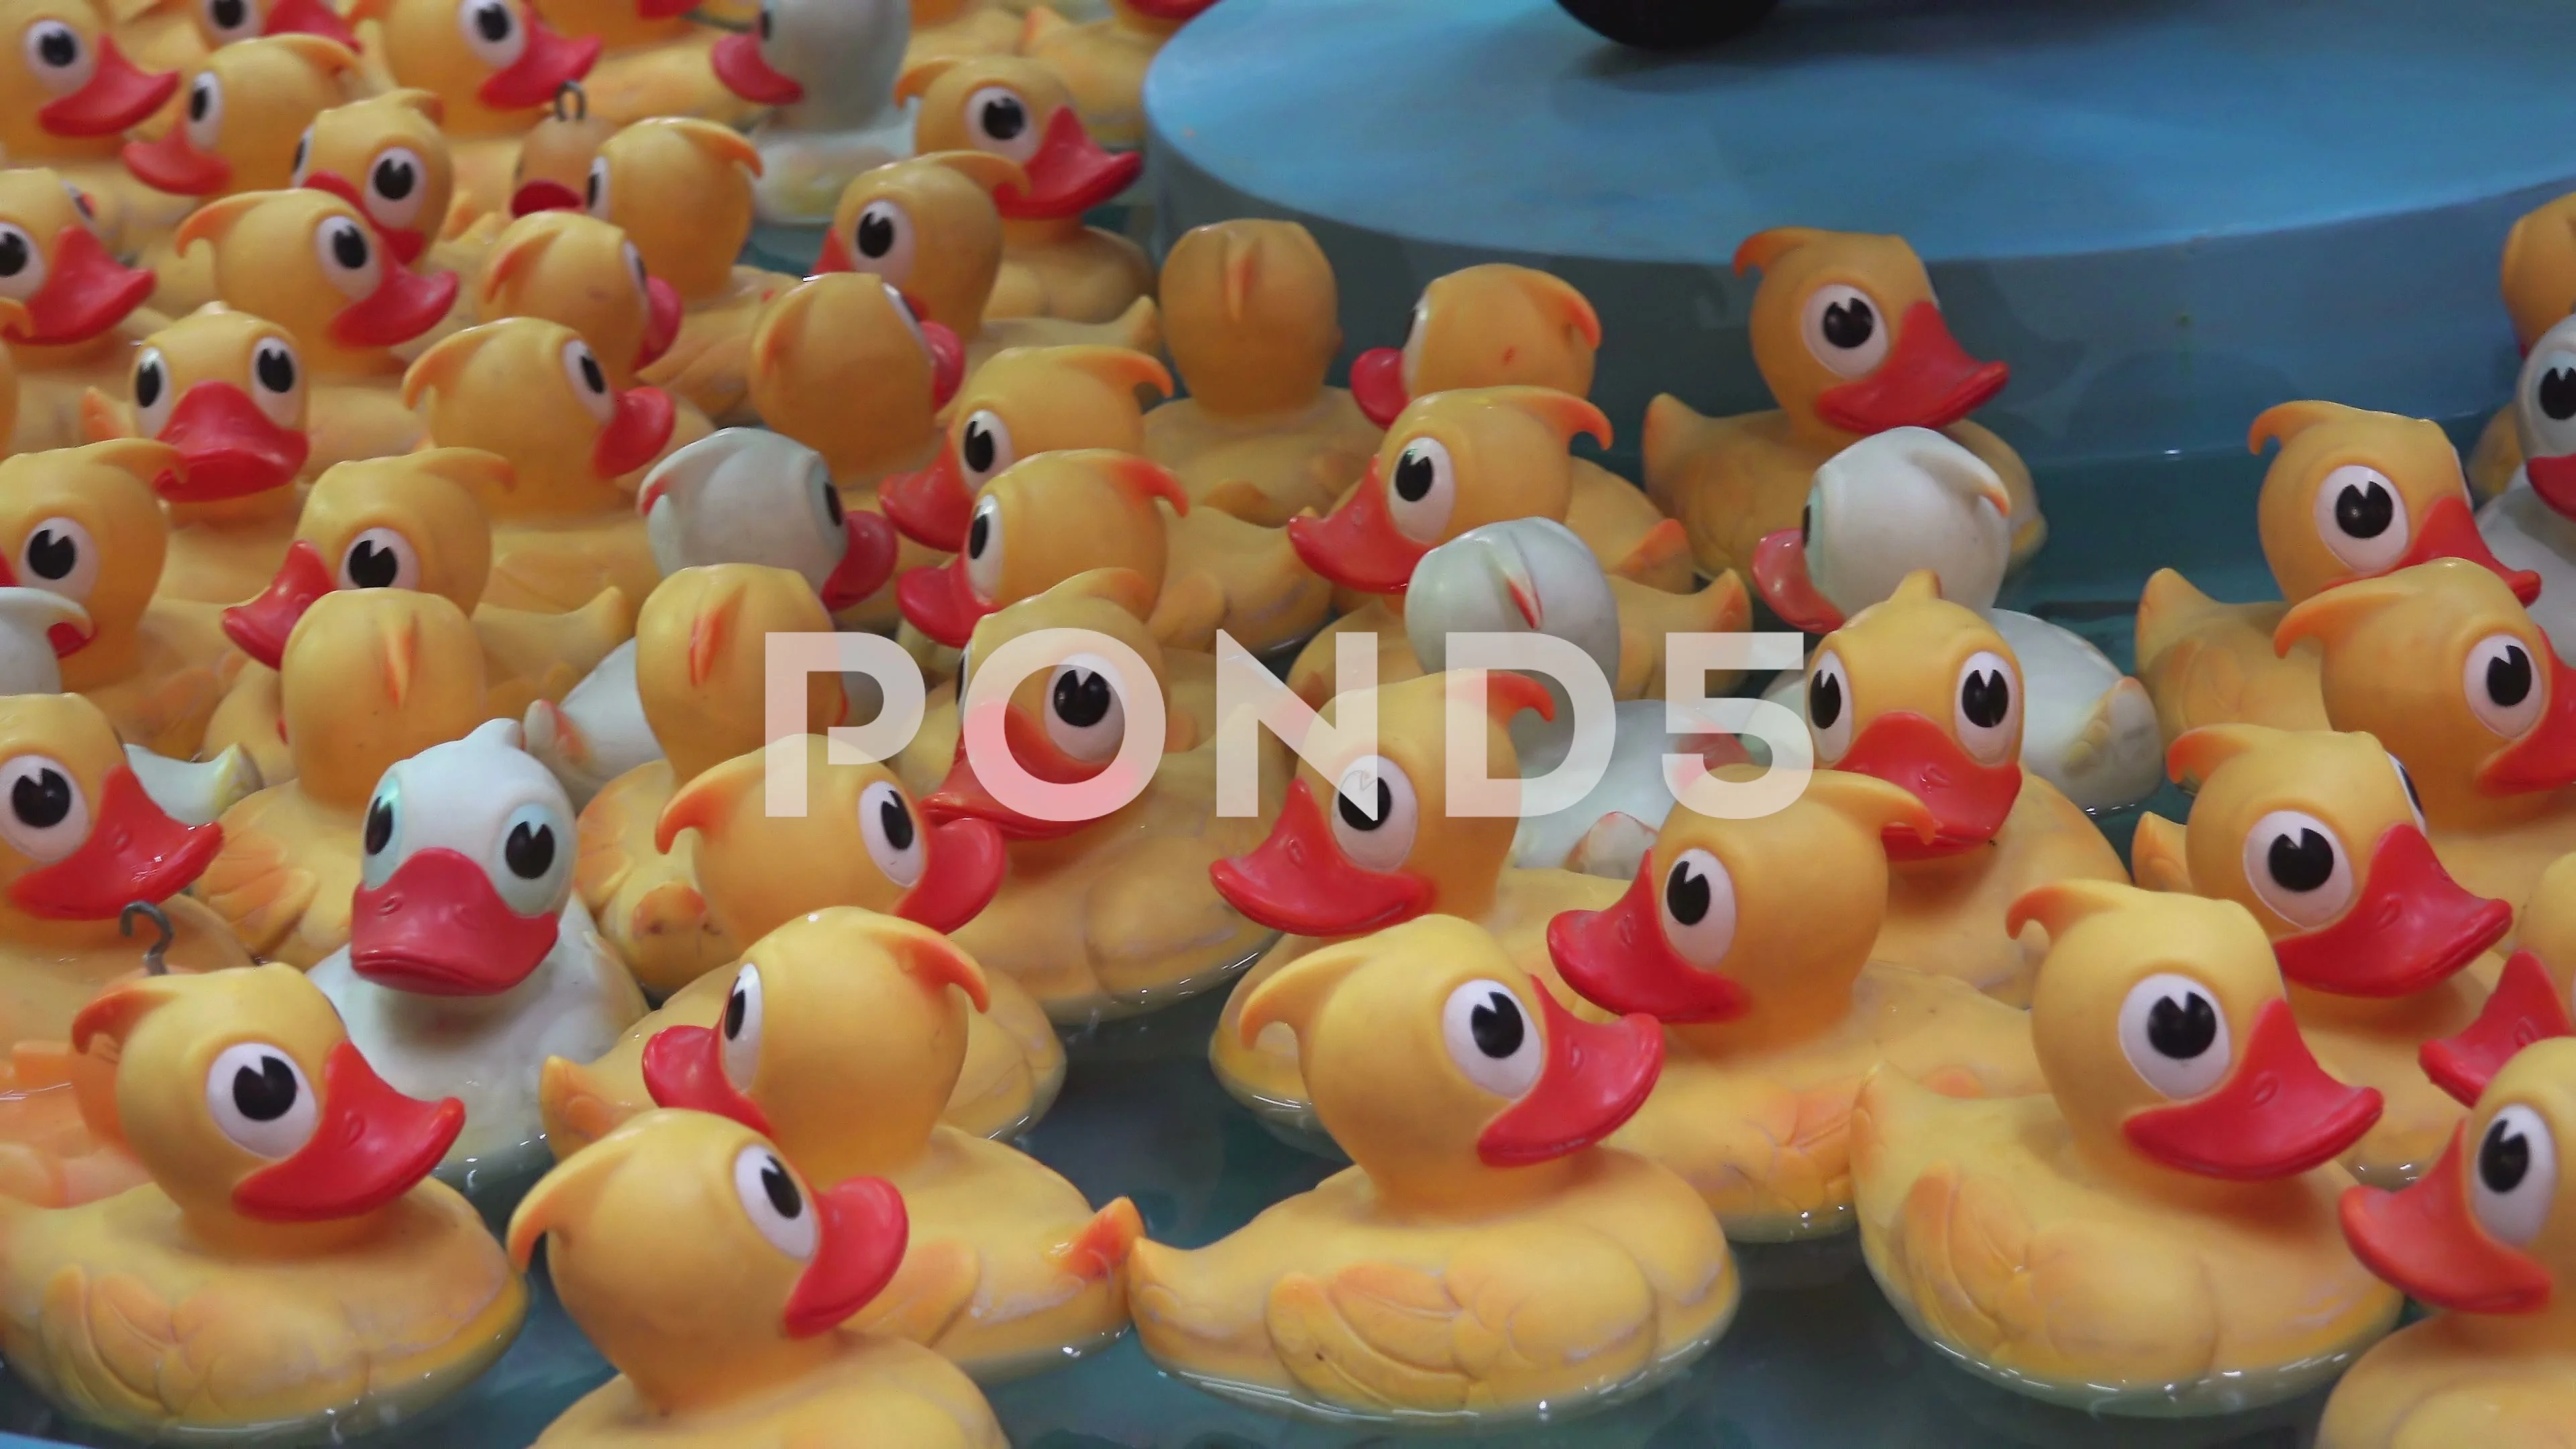 https://images.pond5.com/rubber-ducks-fishing-game-arcade-footage-067878010_prevstill.jpeg